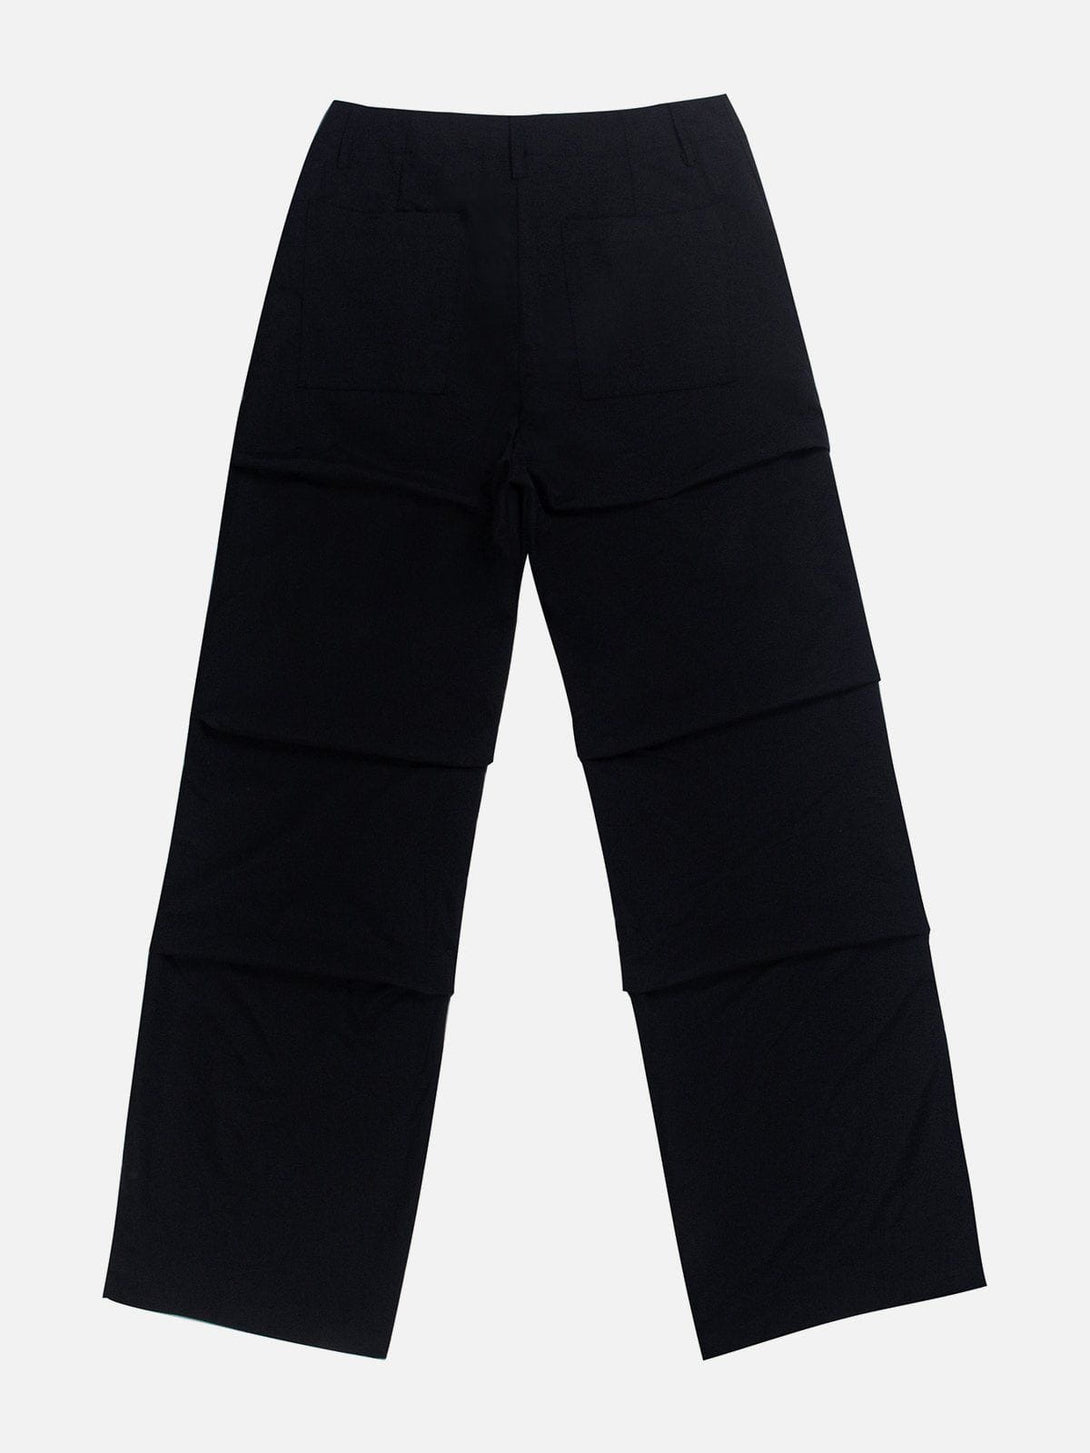 Majesda® - Stacking Cargo Pants outfit ideas streetwear fashion